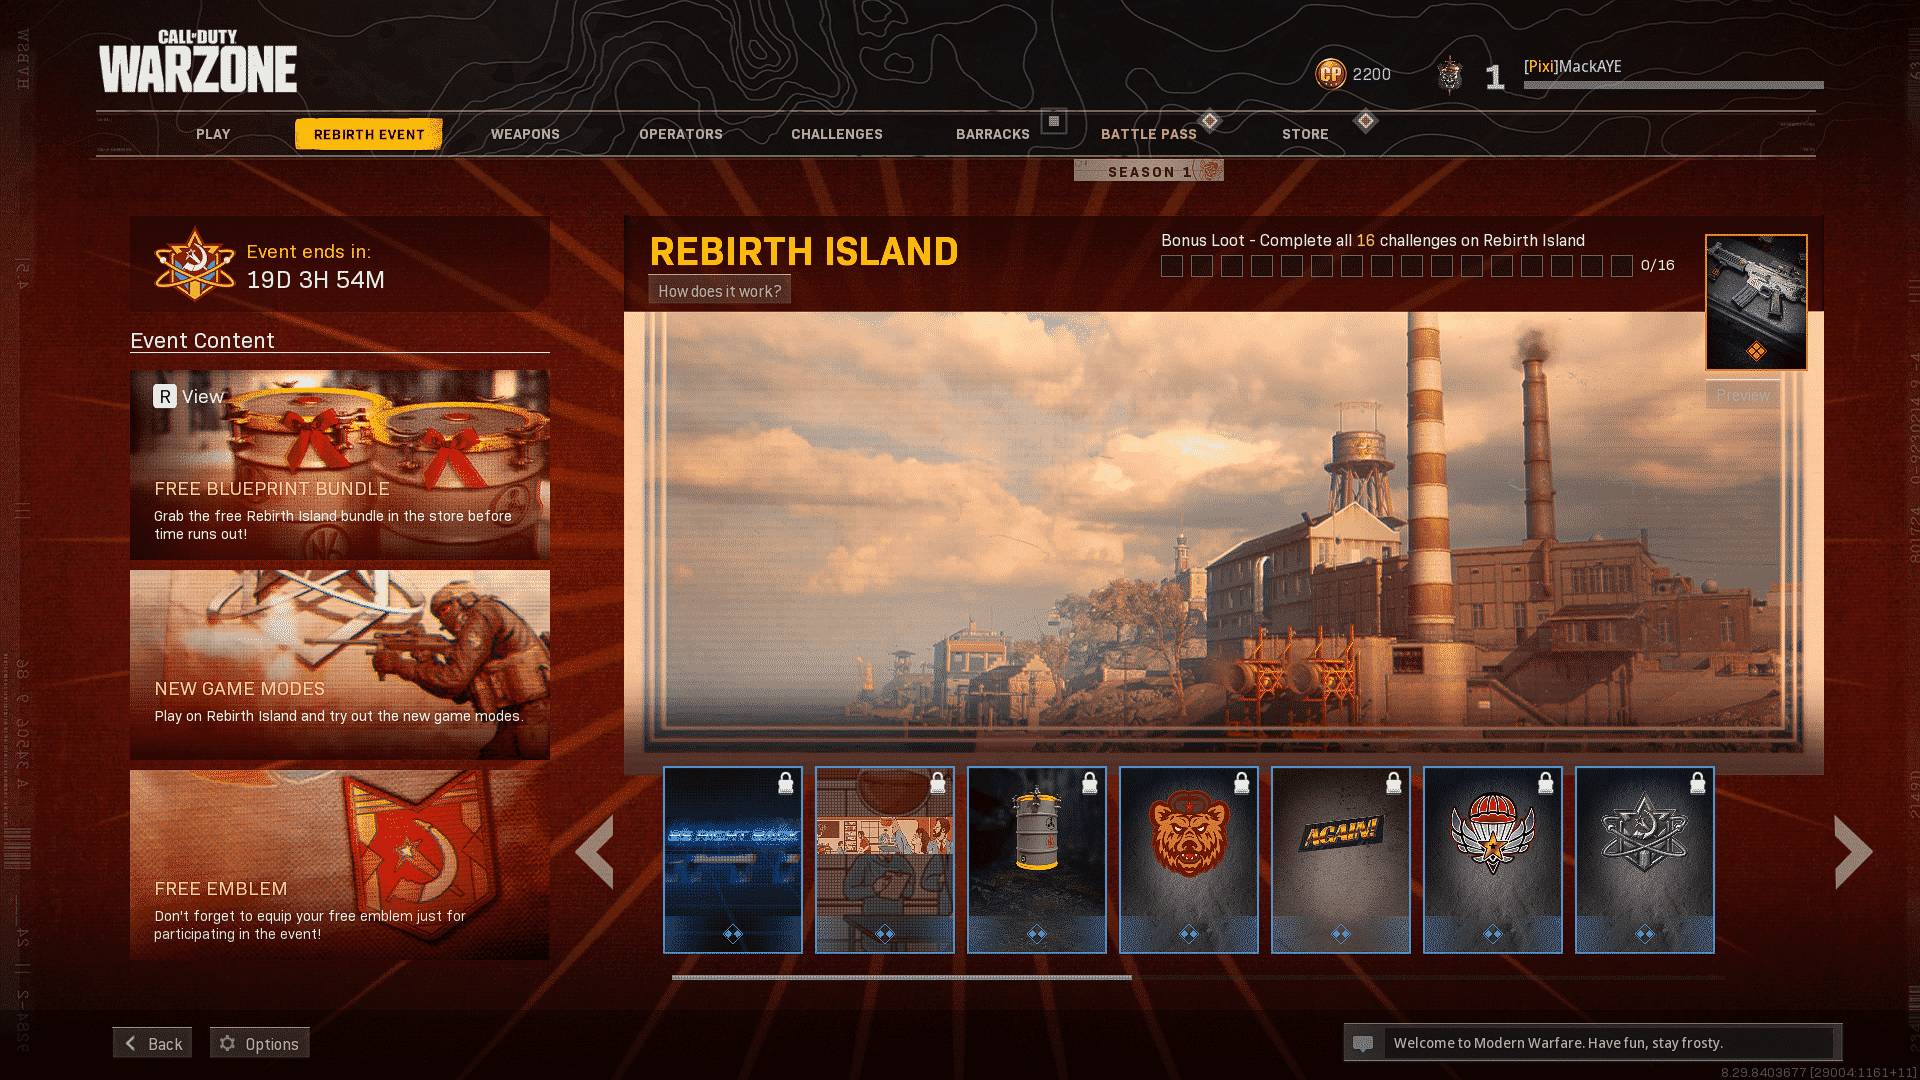 Rebirth Island Event in Call of Duty Warzone